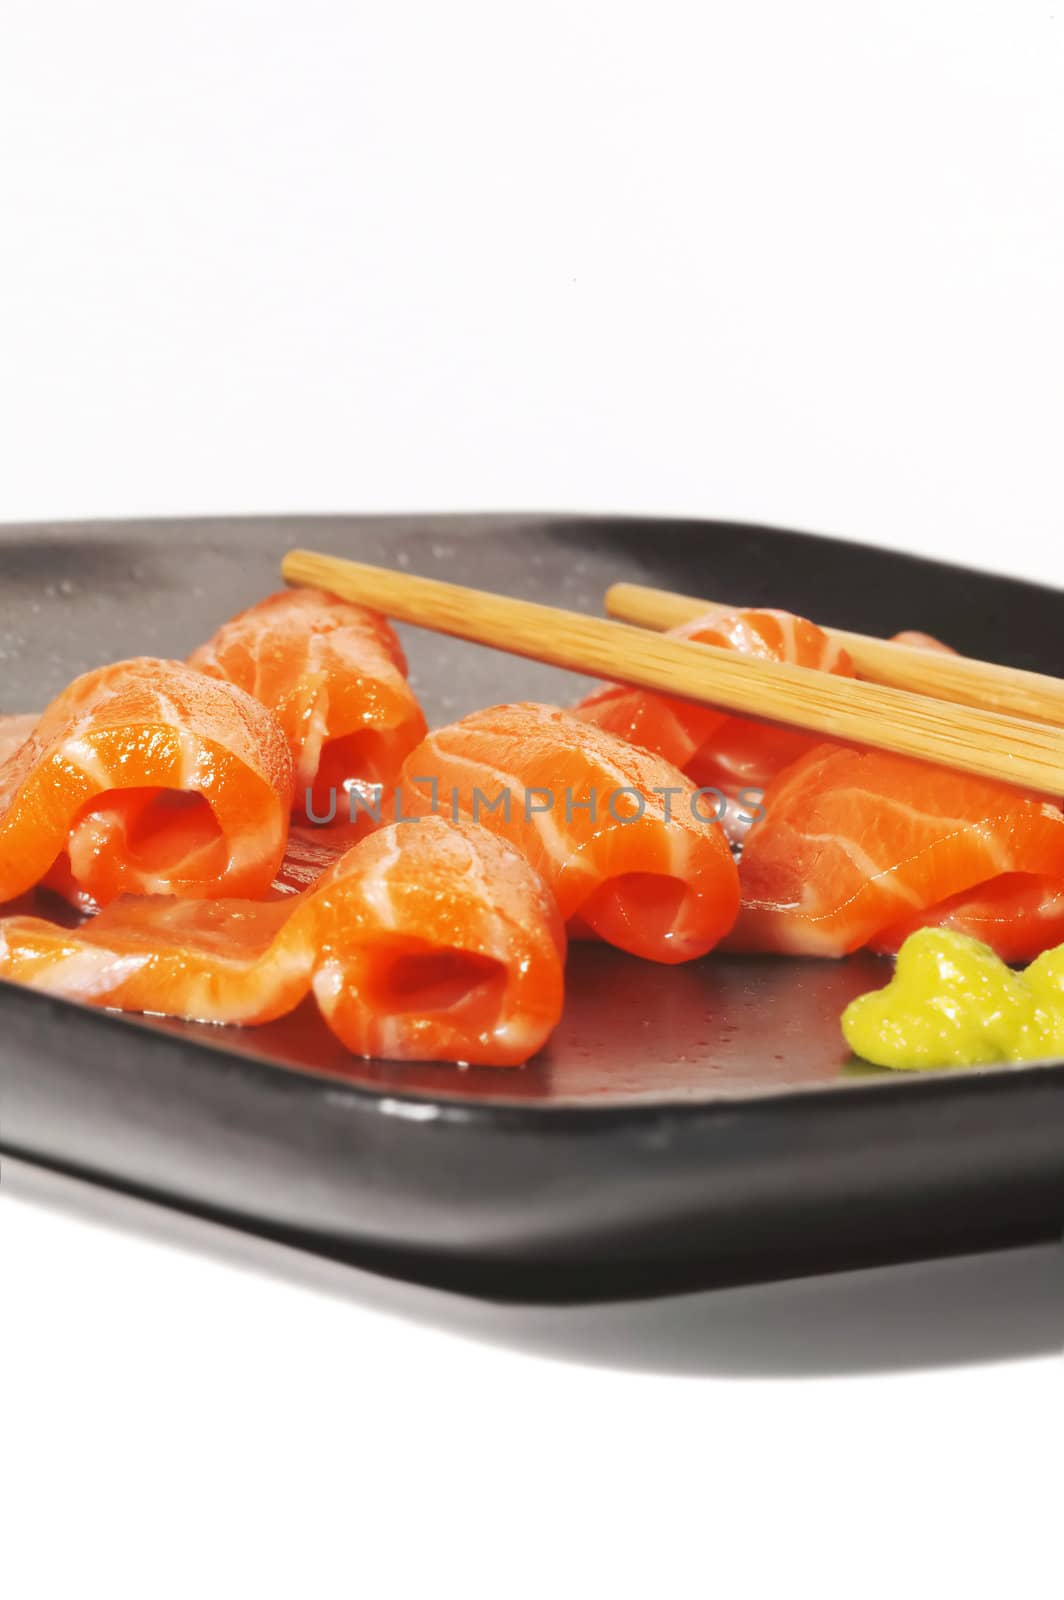 salmon sushi by keko64